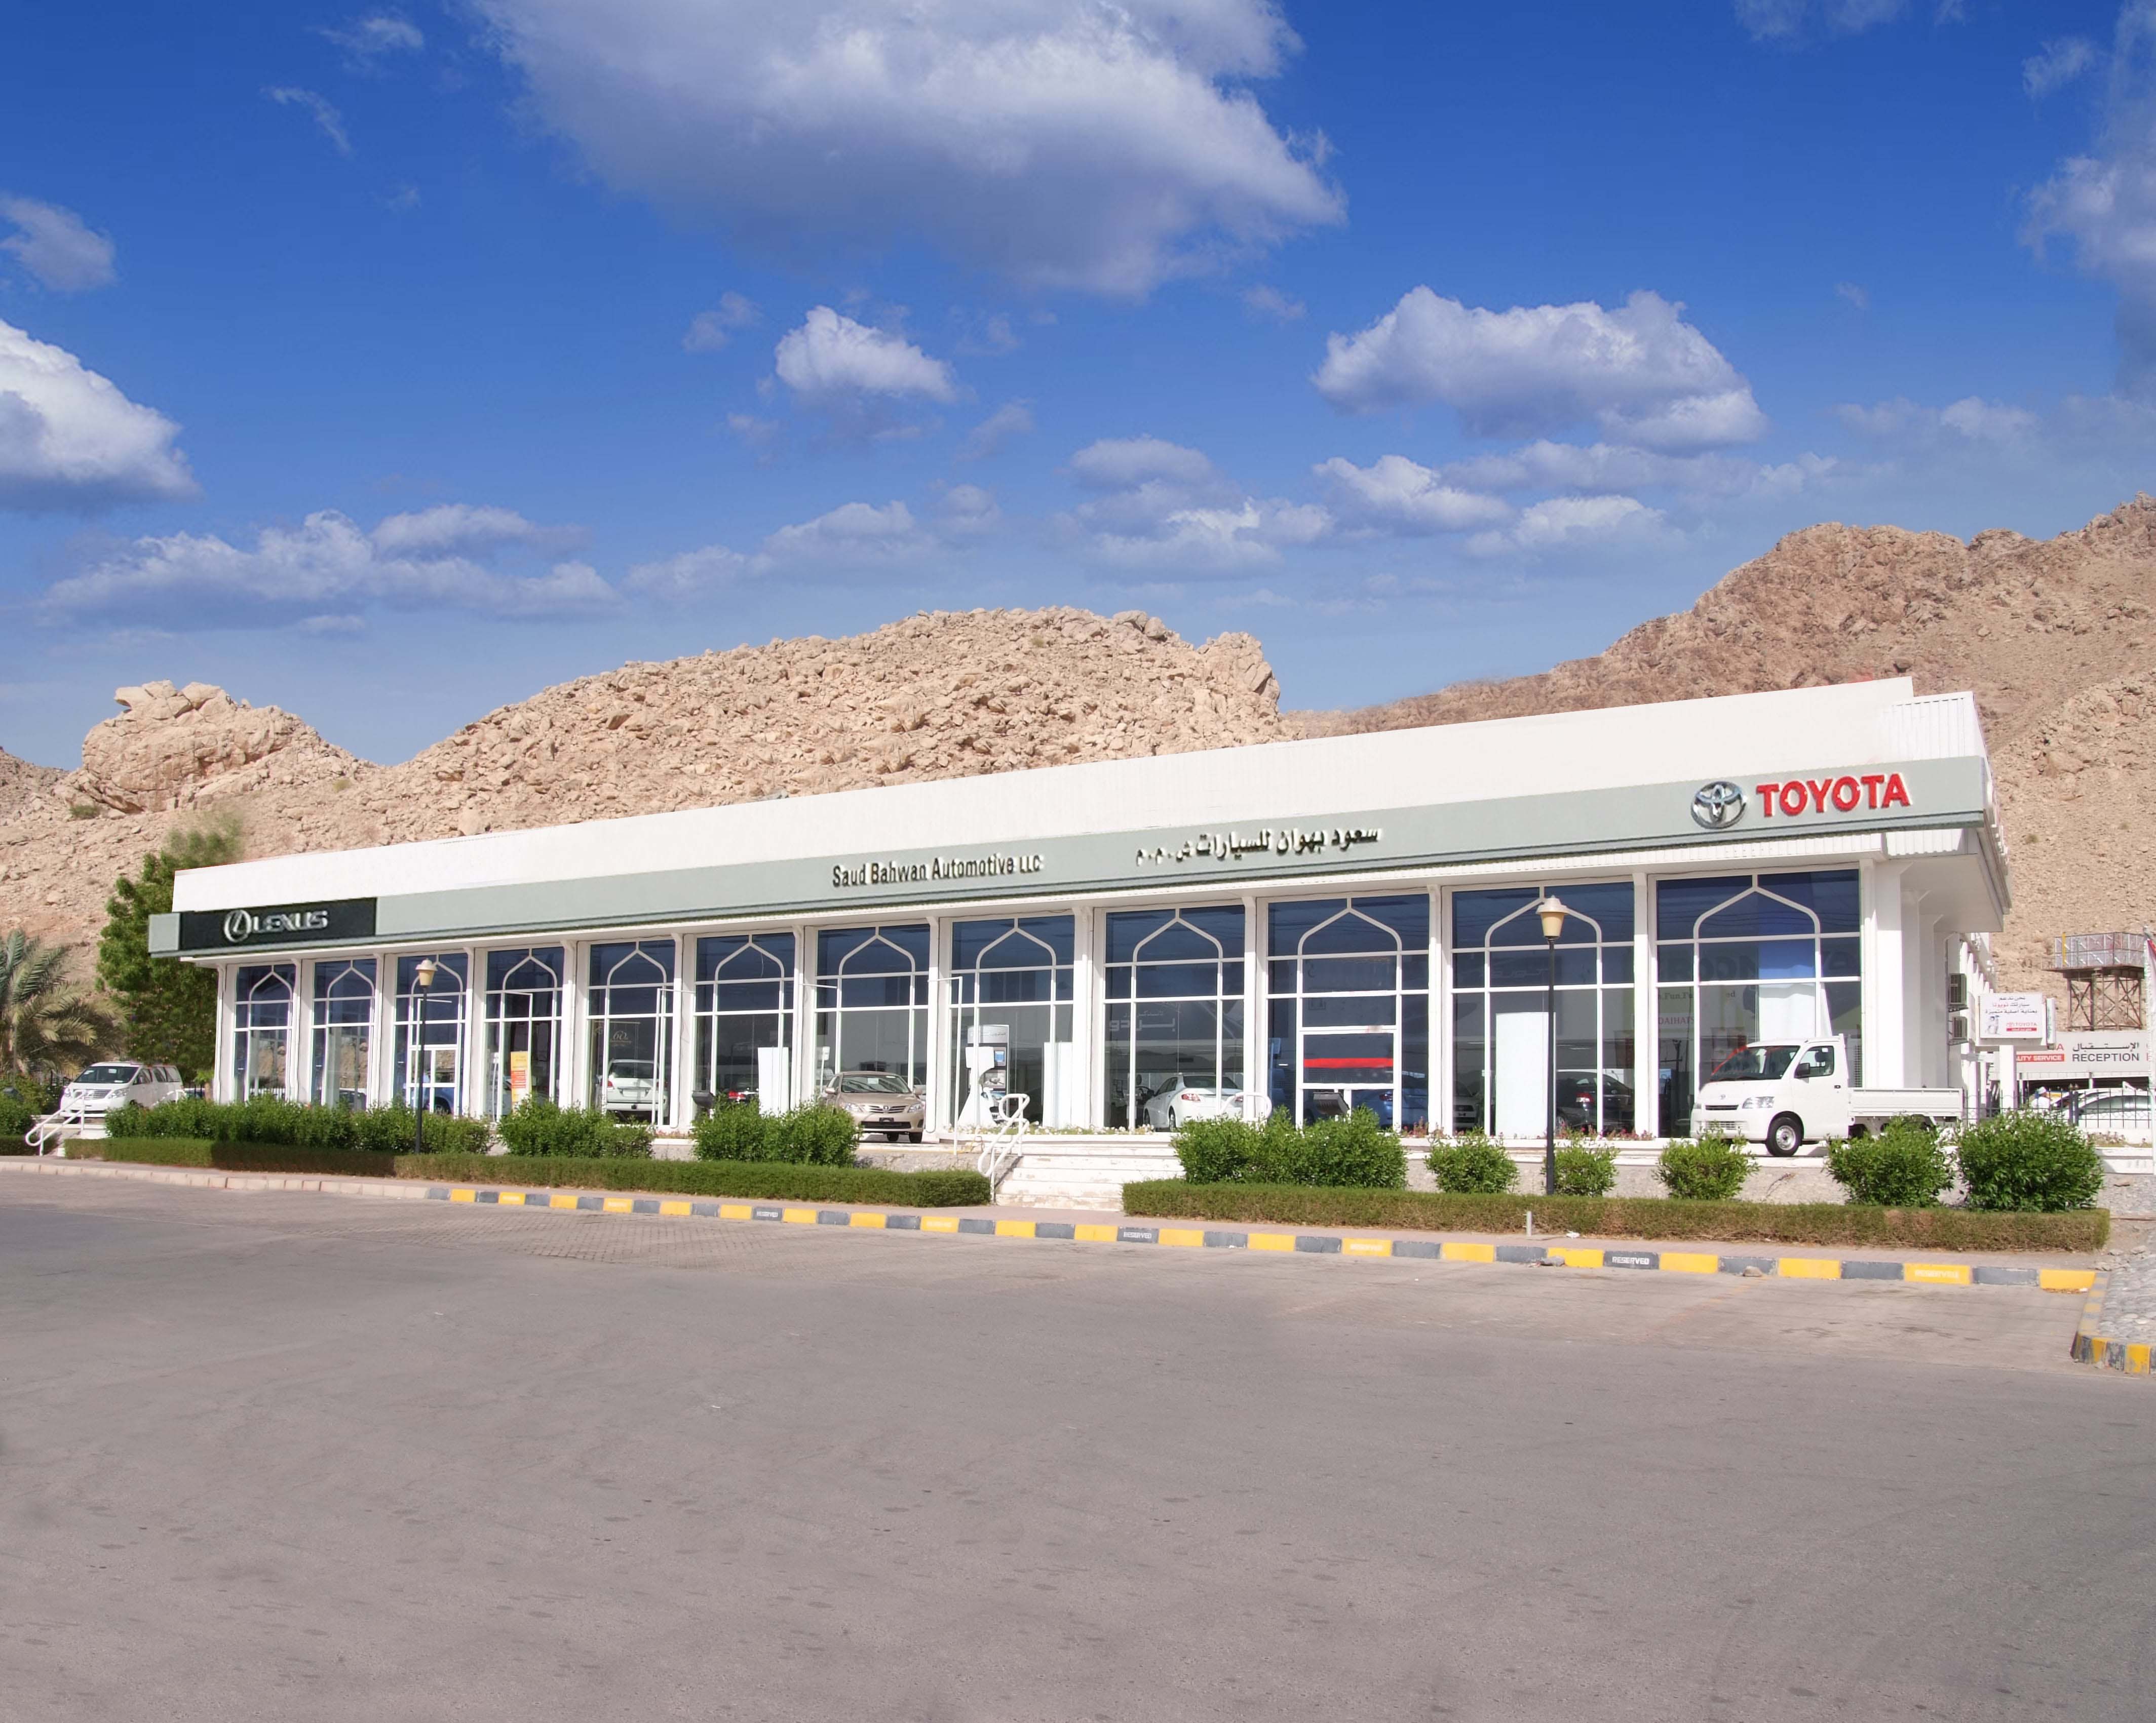 Saud Bahwan's automotive LLC showroom